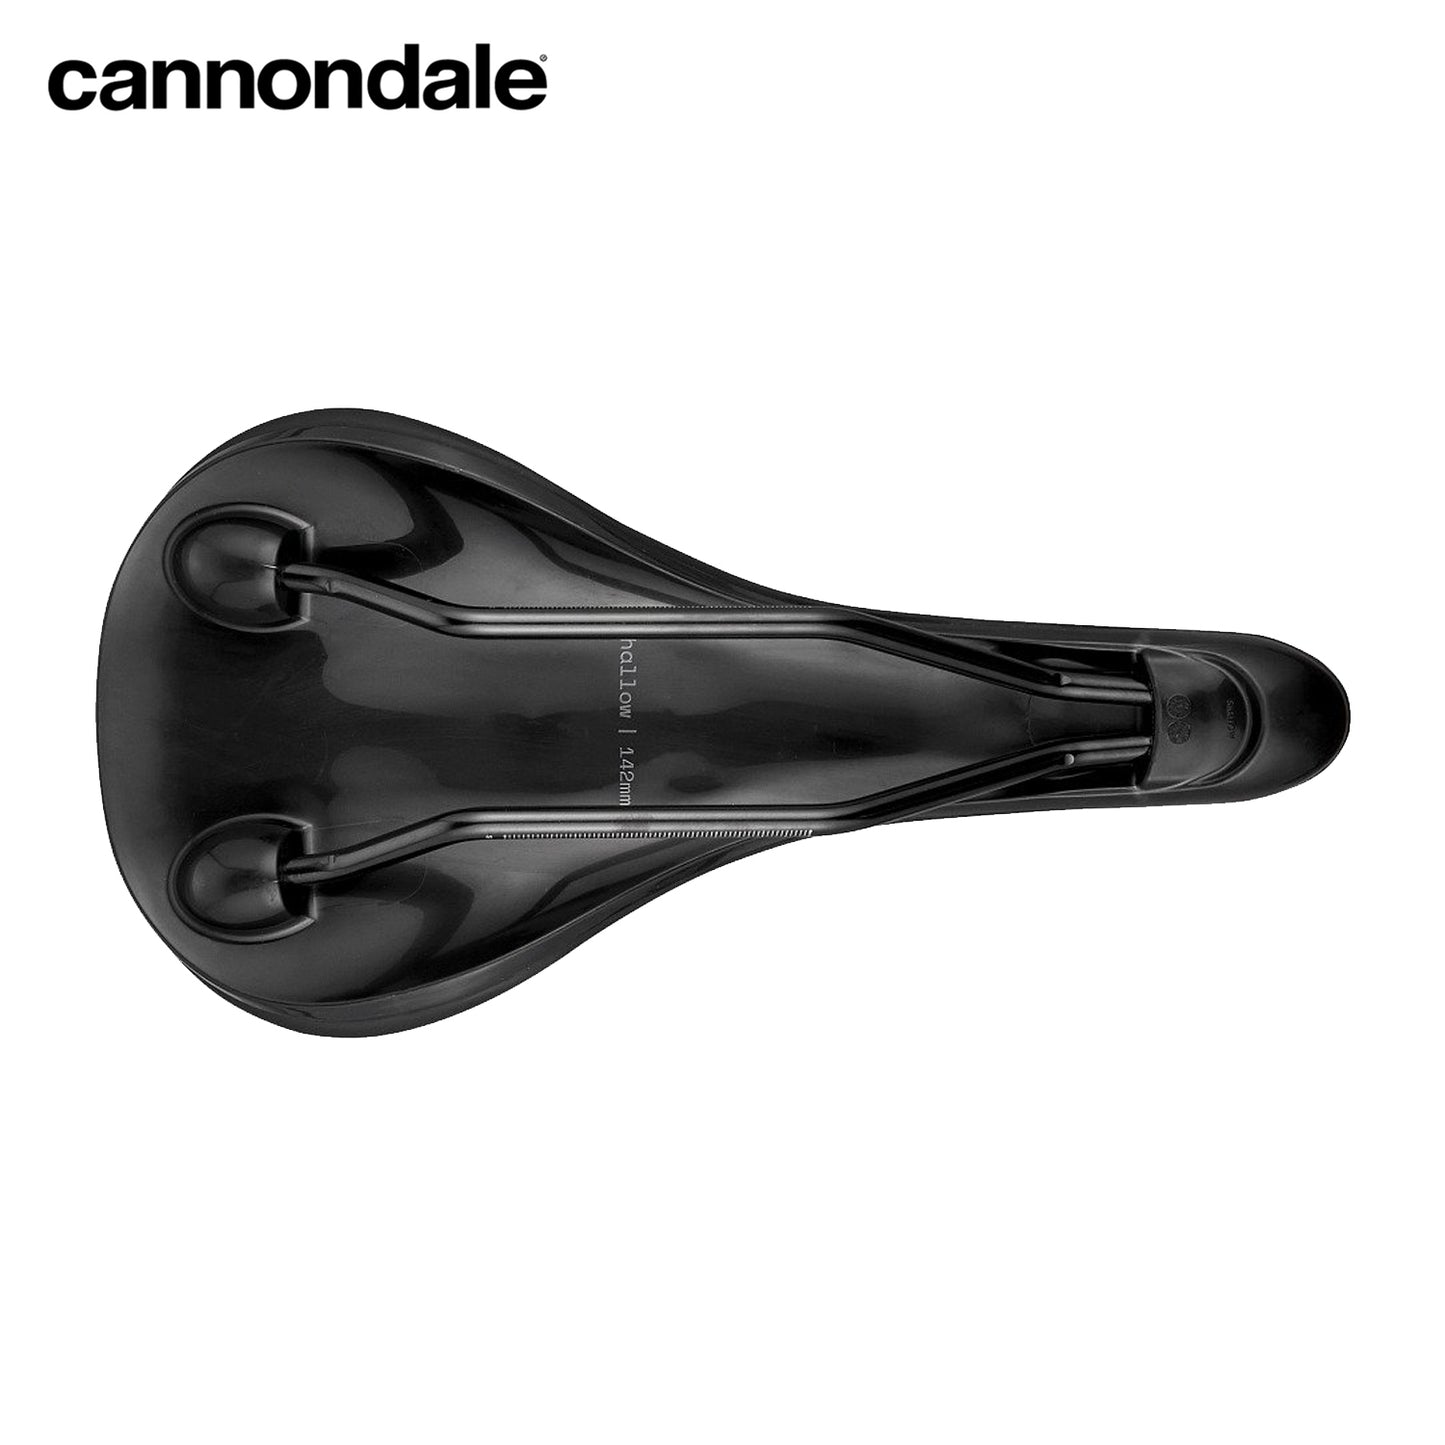 Cannondale Scoop Steel Shallow Saddle 142mm - Black